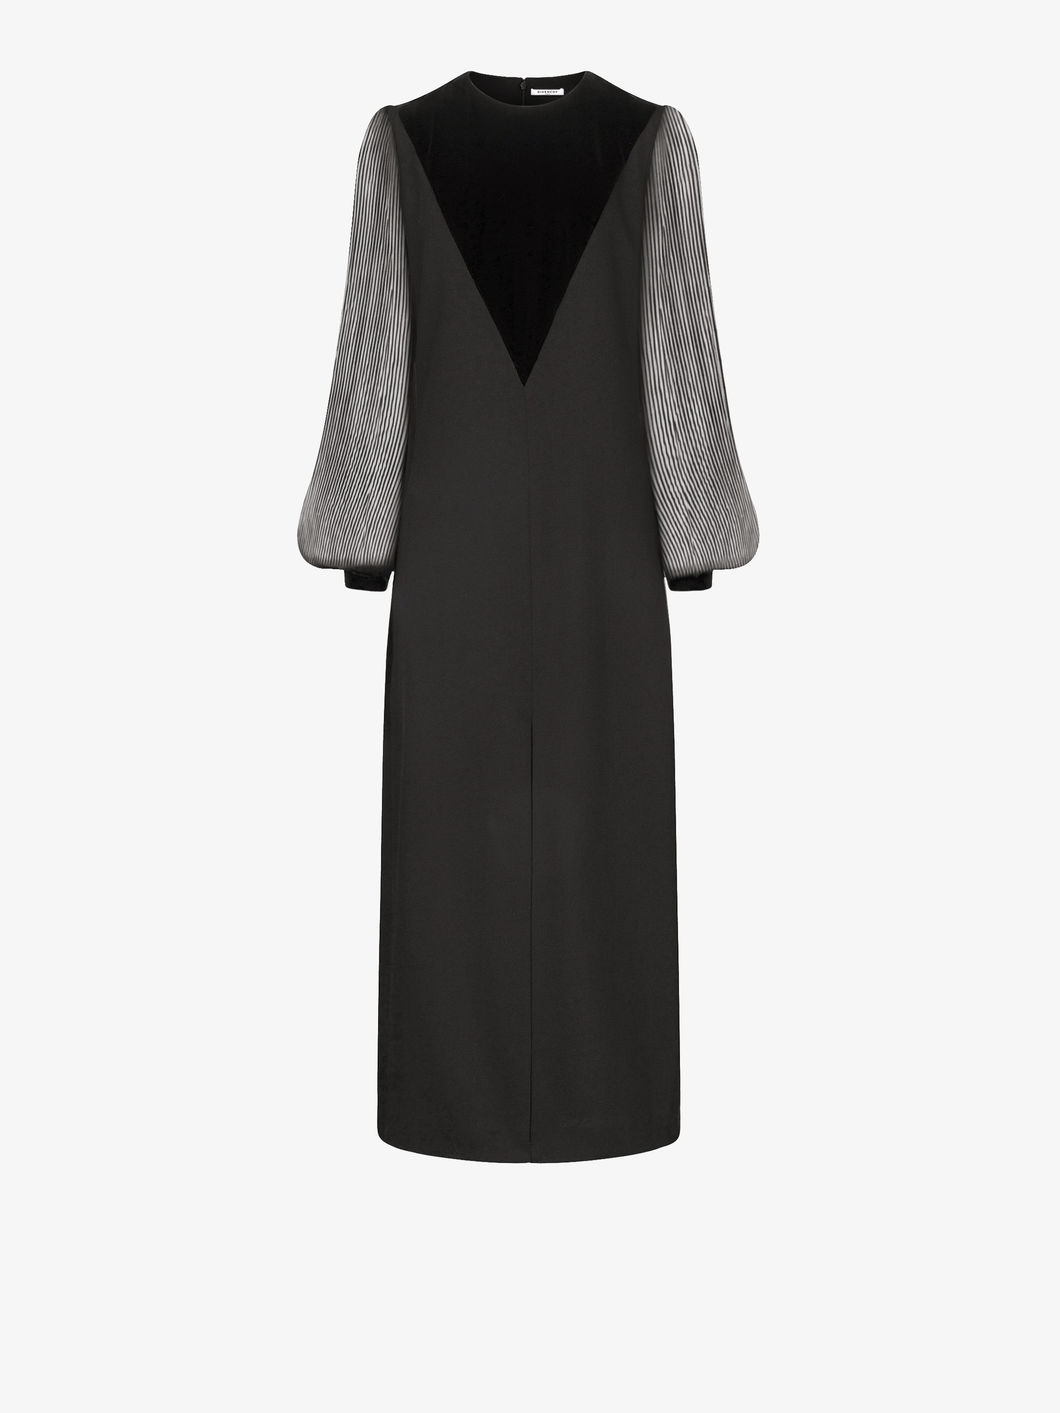 Meghan Markle Wears Black Givenchy for Oceania Exhibit - Dress Like A ...